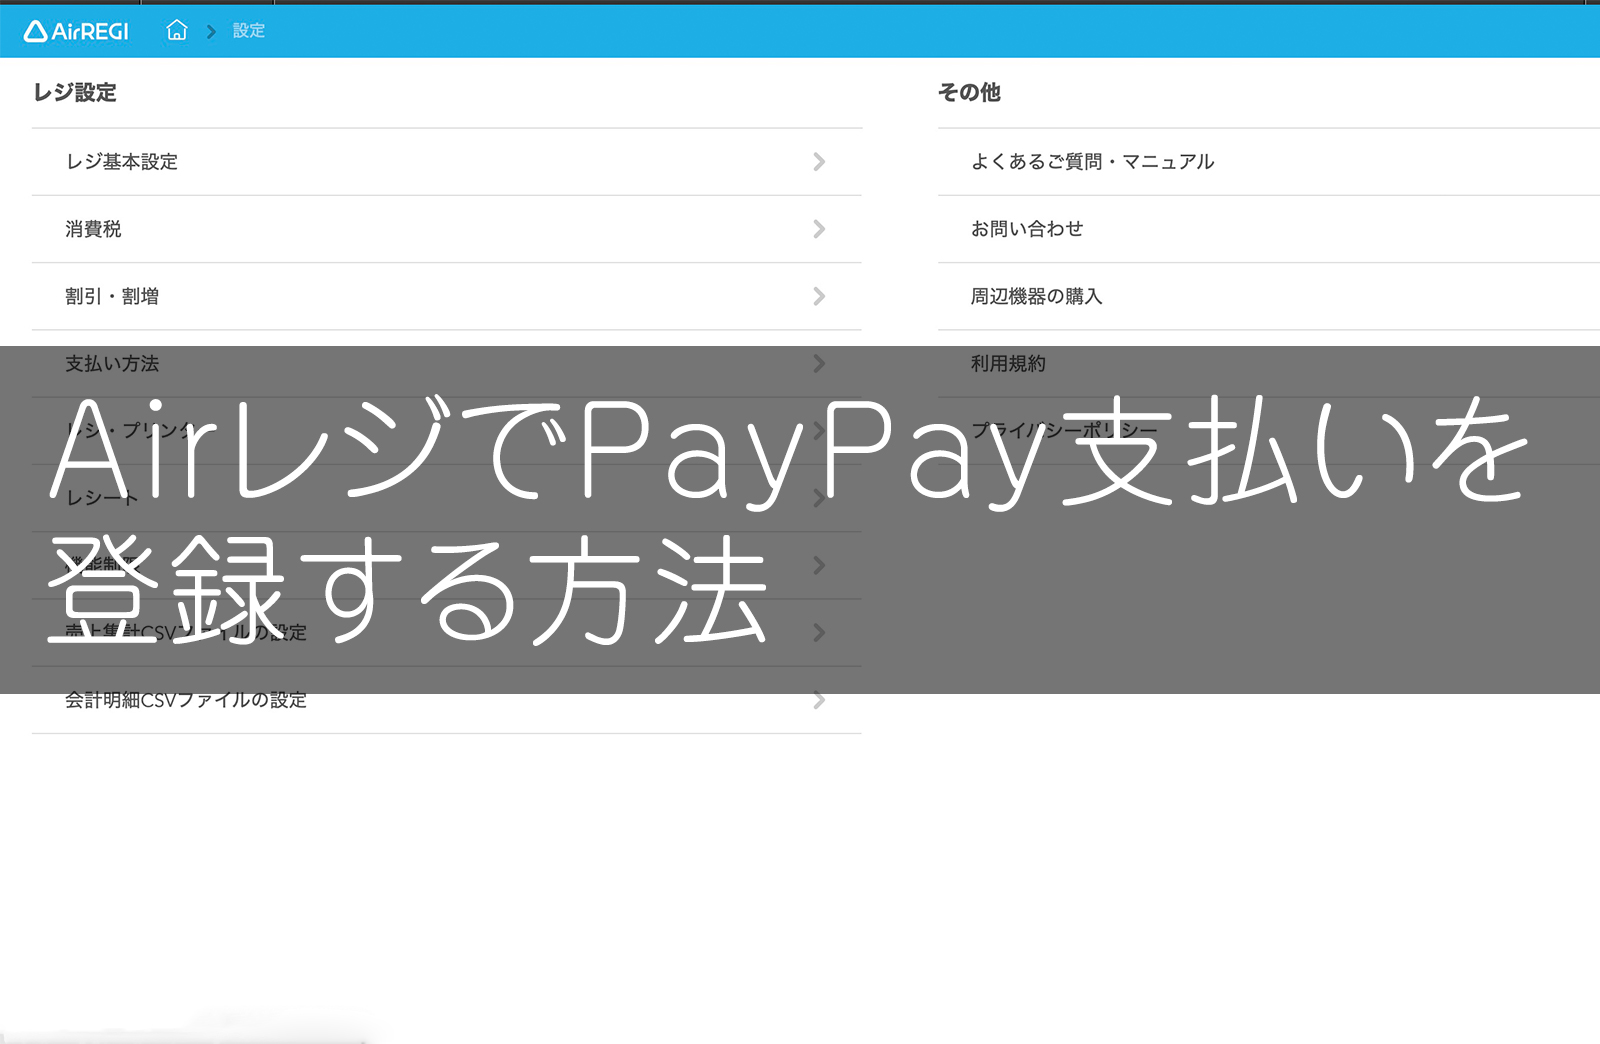 AirレジでPayPay(ペイペイ)を追加登録する方法